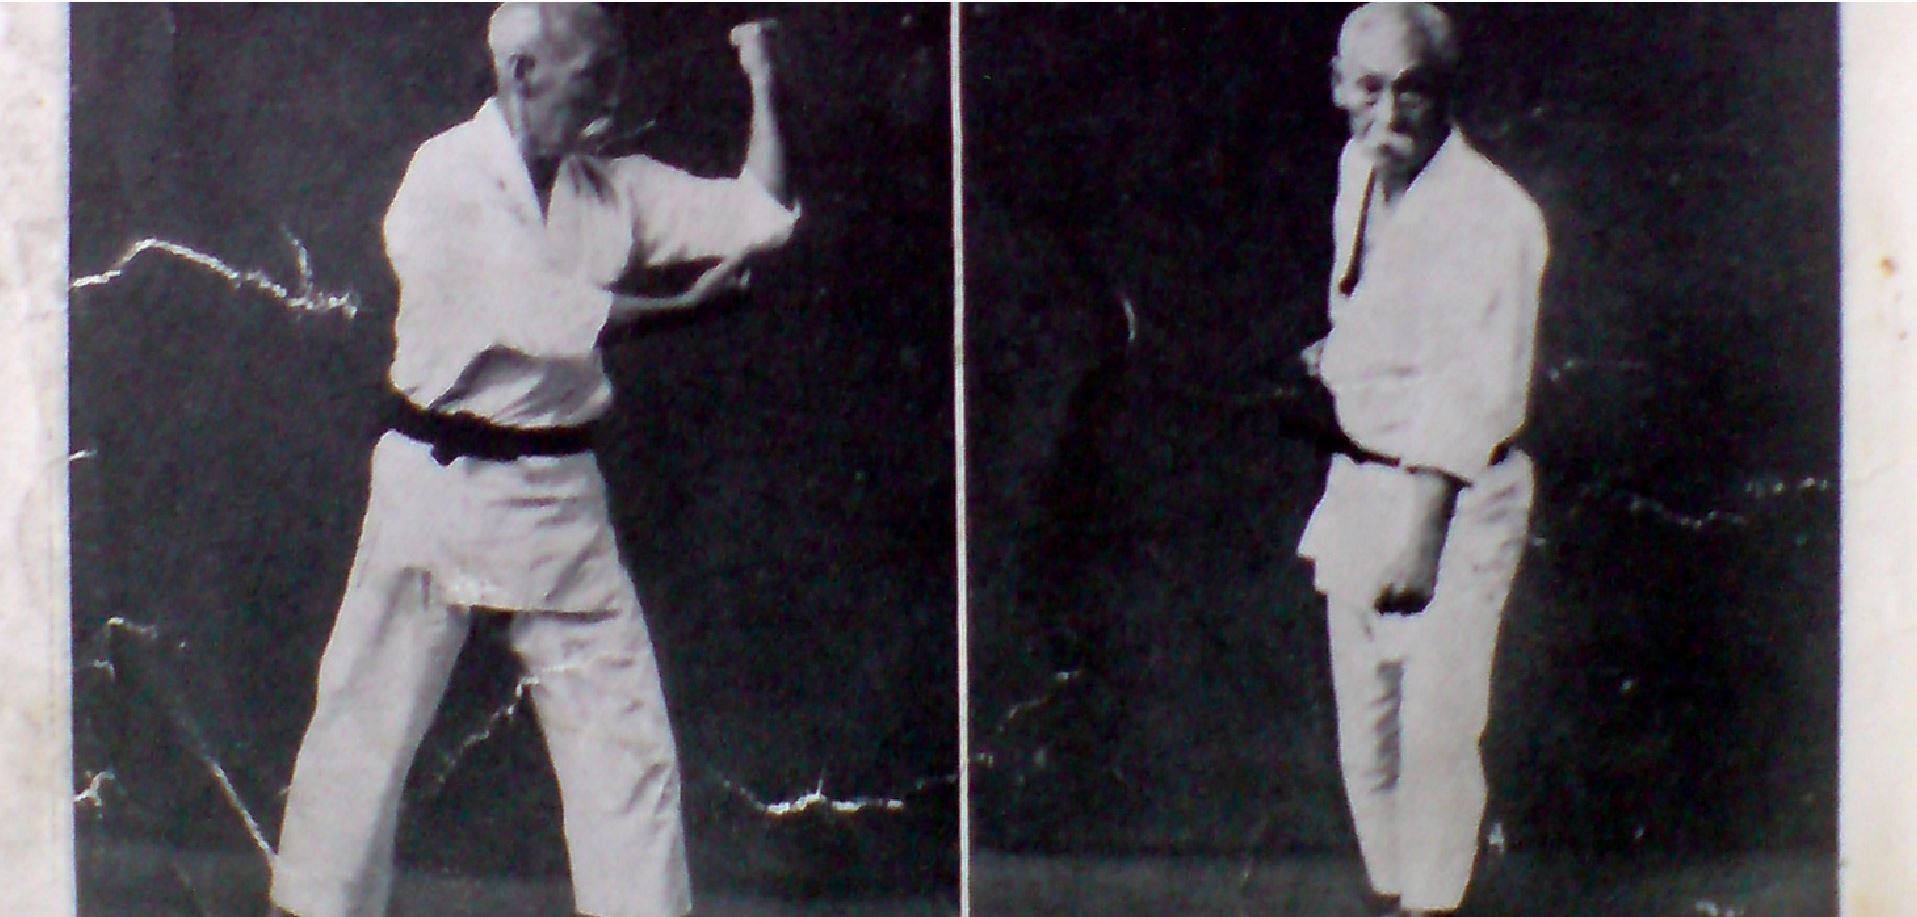 Hanashiro Chōmo performing "Jion", from original 1938 edition of "Karatedo Taikan" of Nagamine Shoshin sensei. Photo by this author.